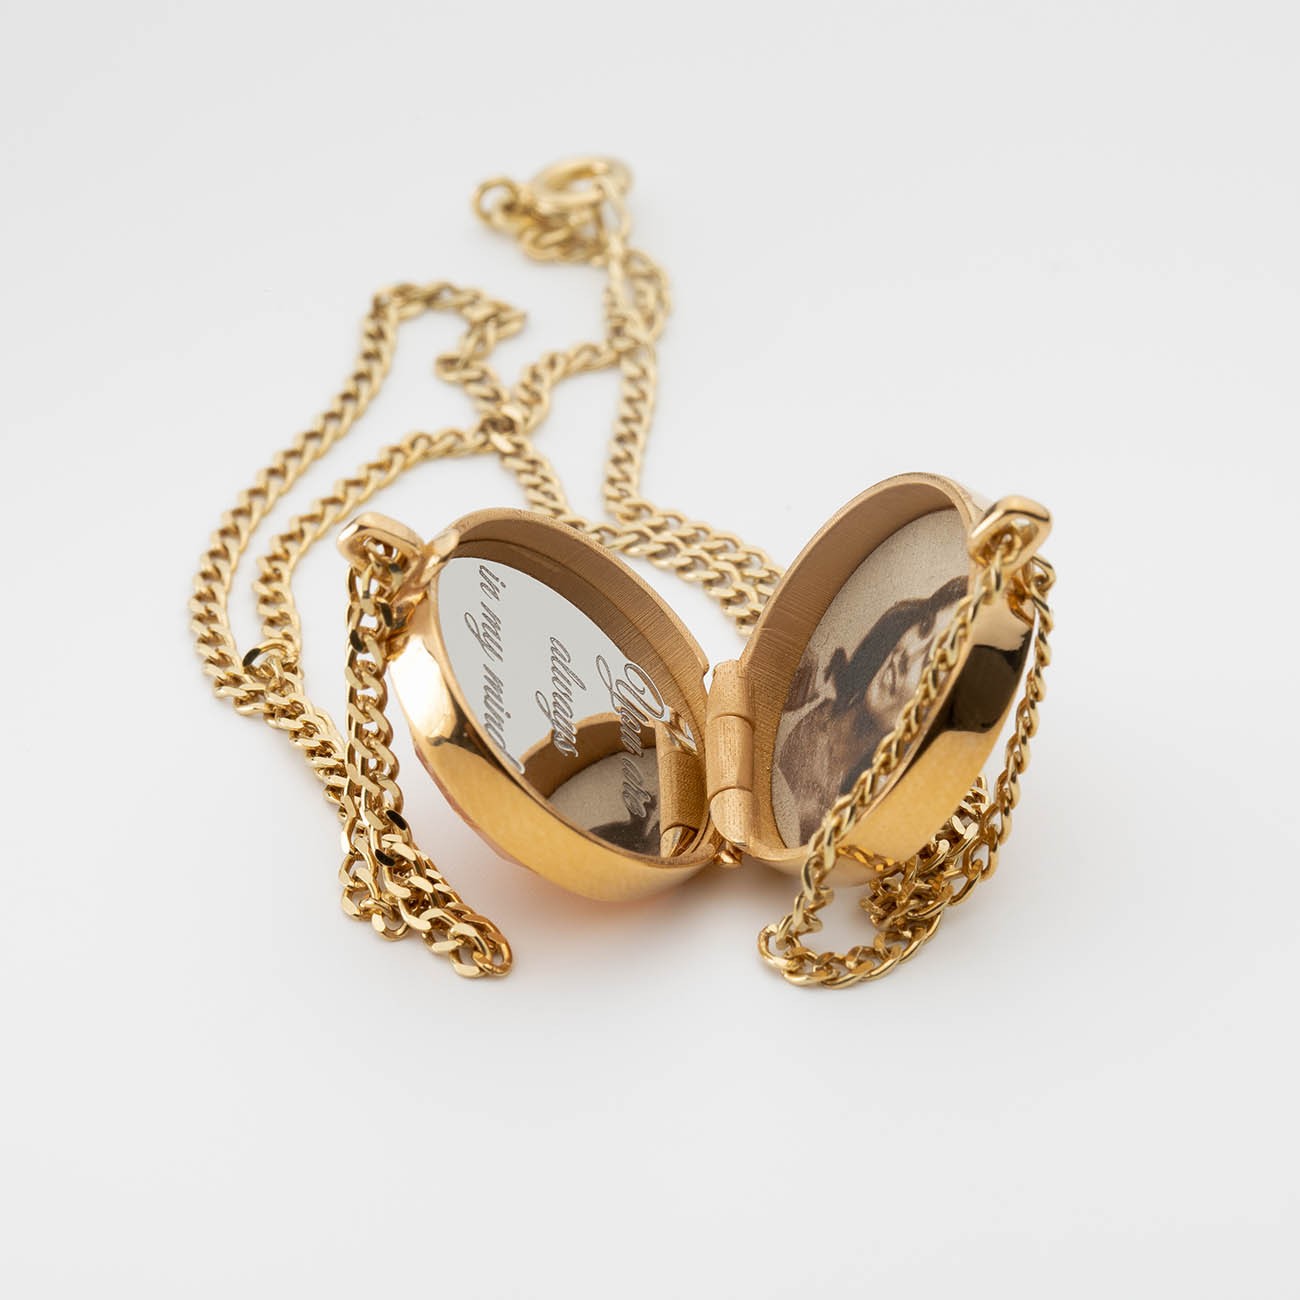 Locket pendant necklace, engraved & foto, rose quartz natural stone, sterling silver 925